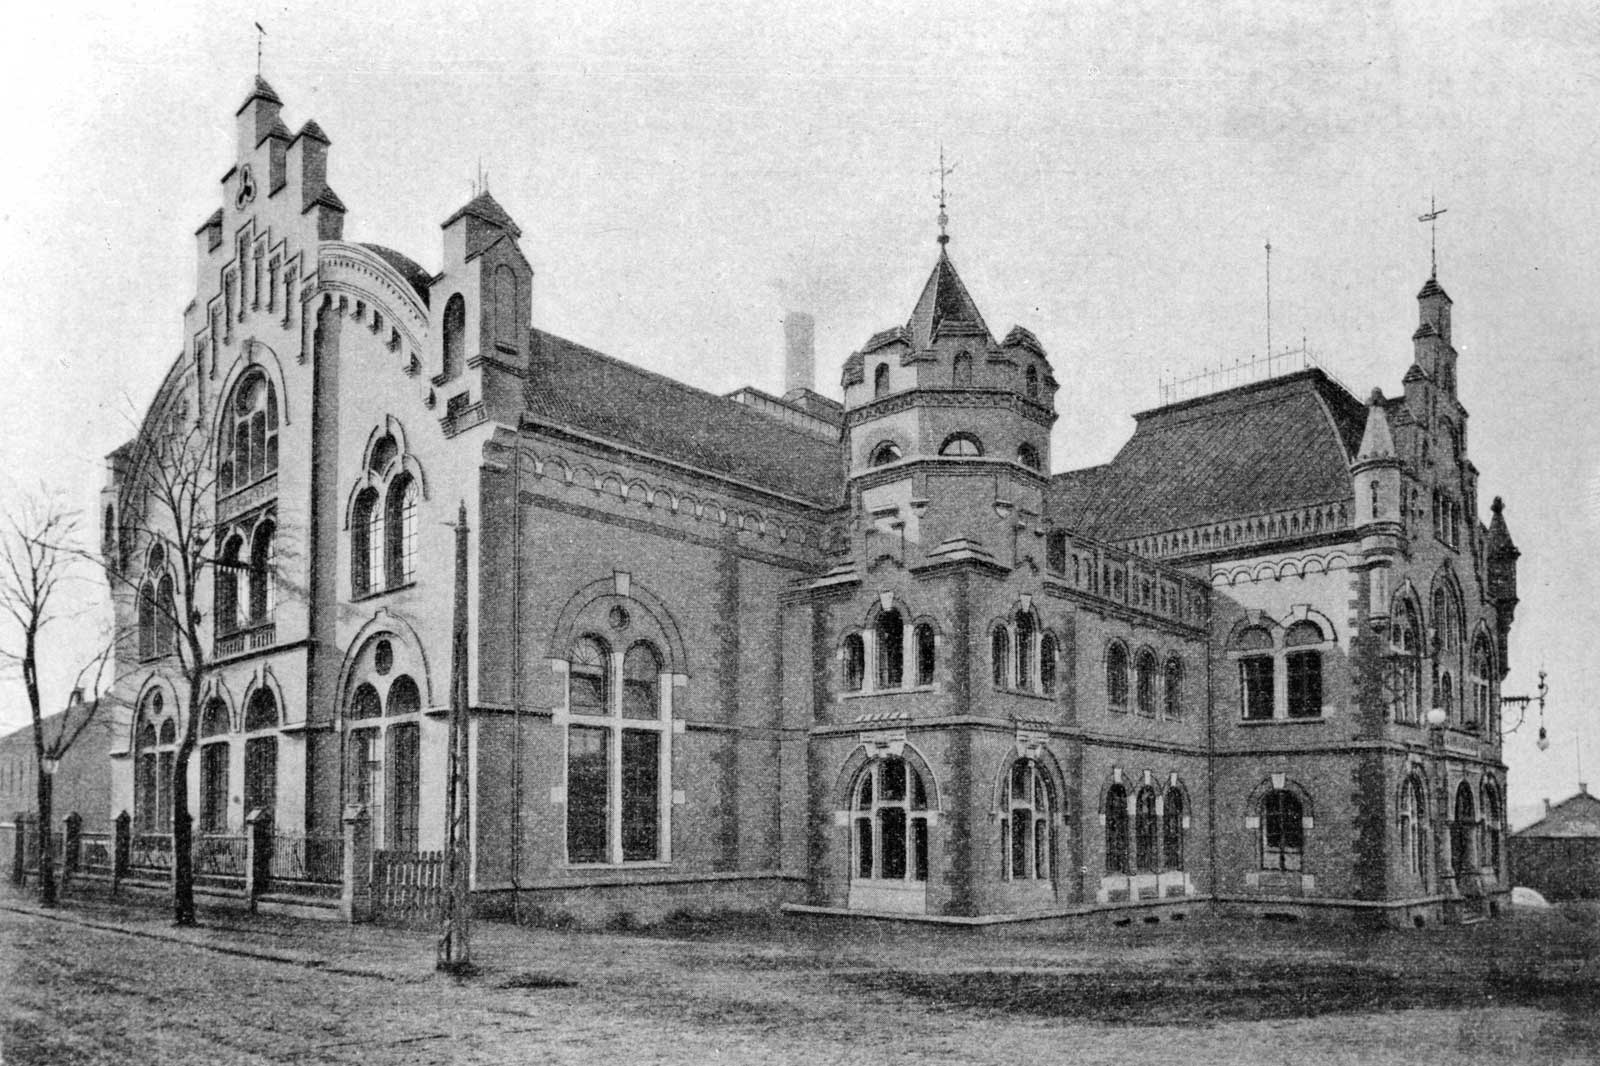 The RWE headquarters in Essen, around 1905